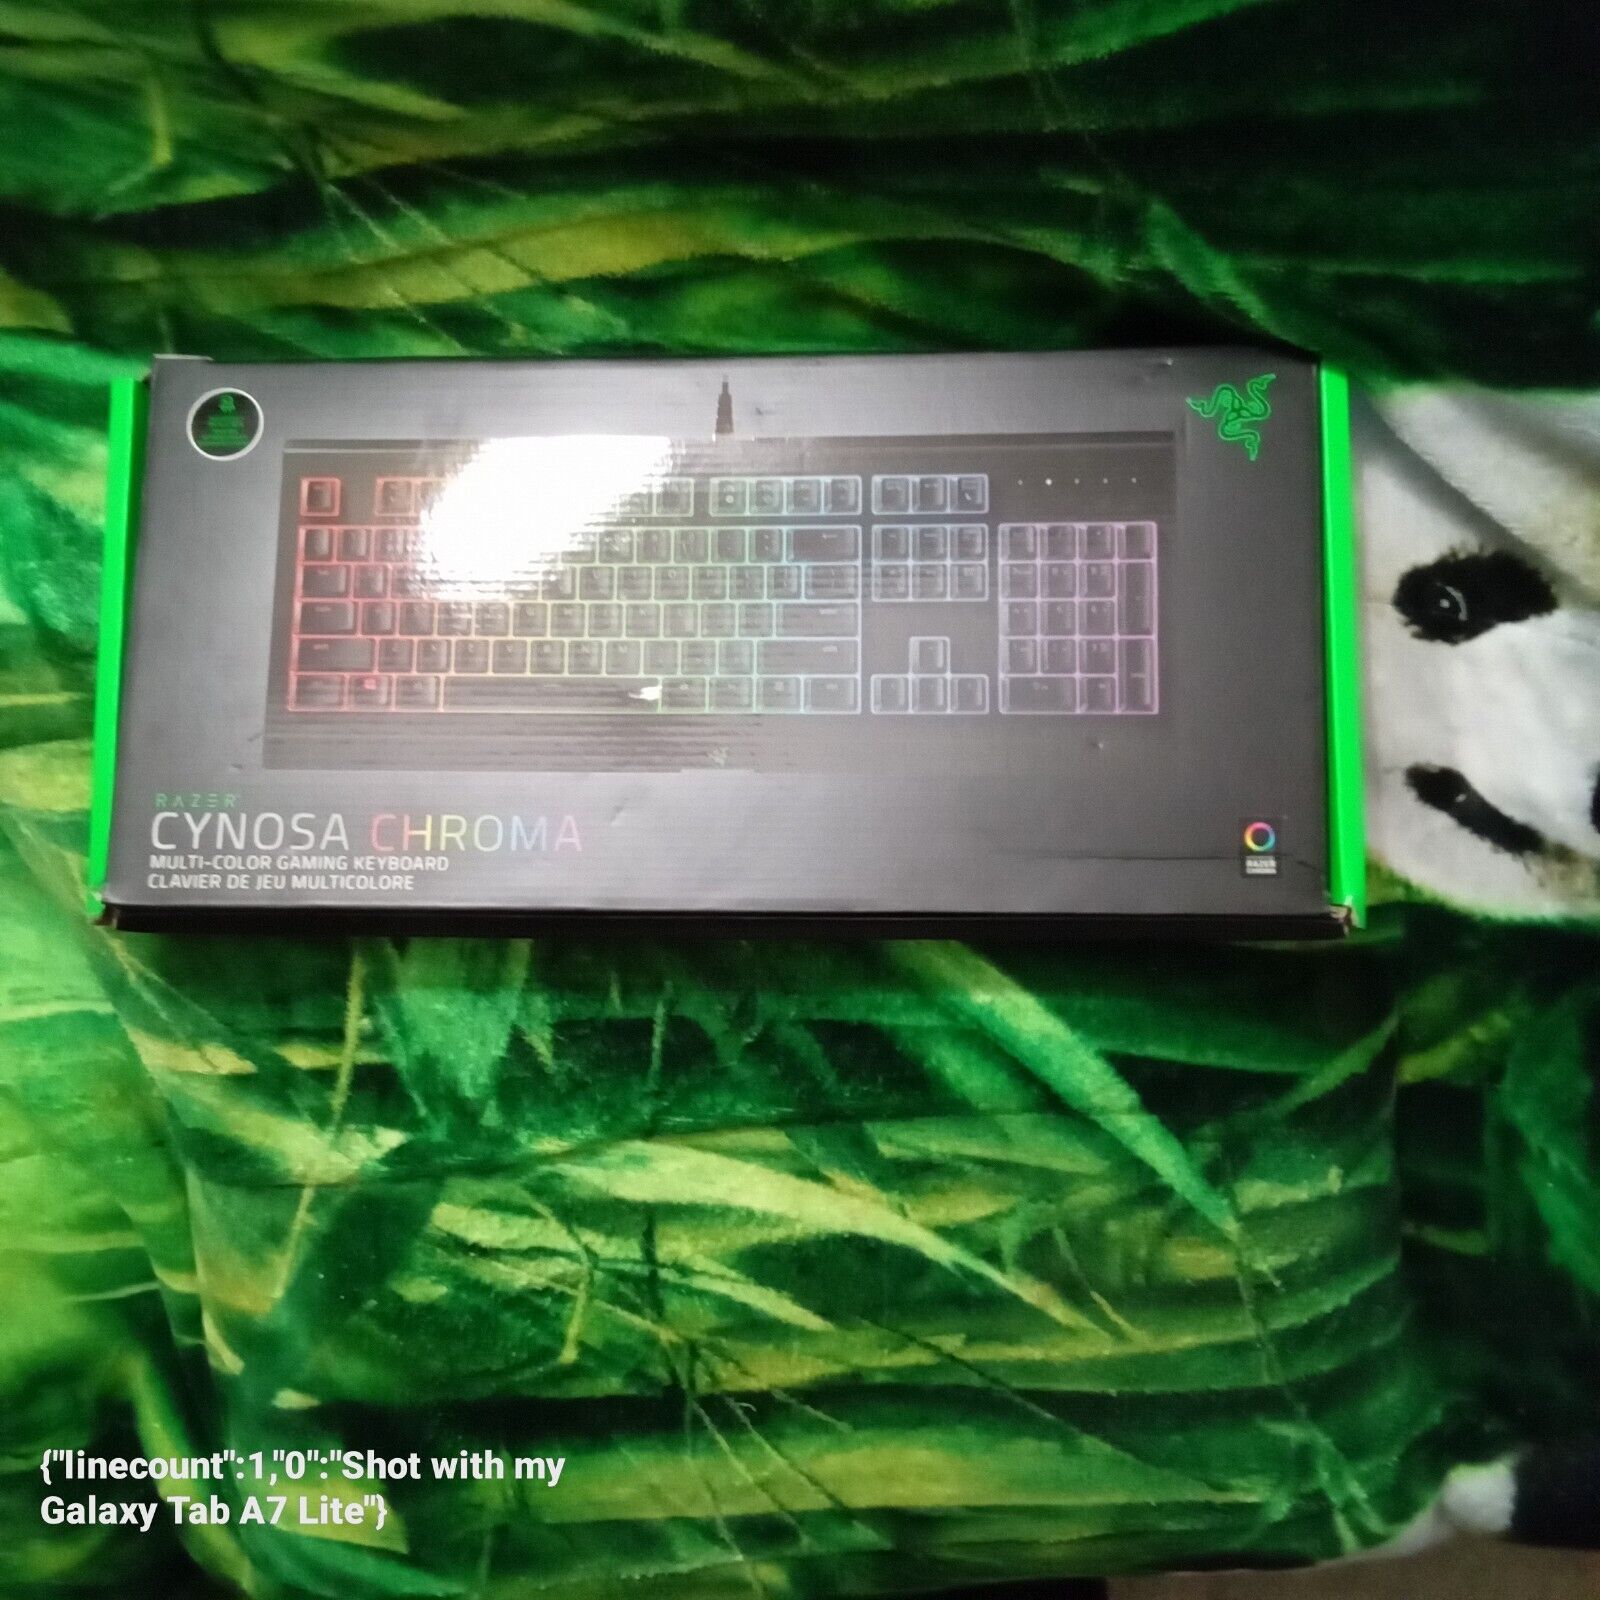 Razer Cynosa Chroma Multi-Color Gaming Keyboard - Wired - Open Box